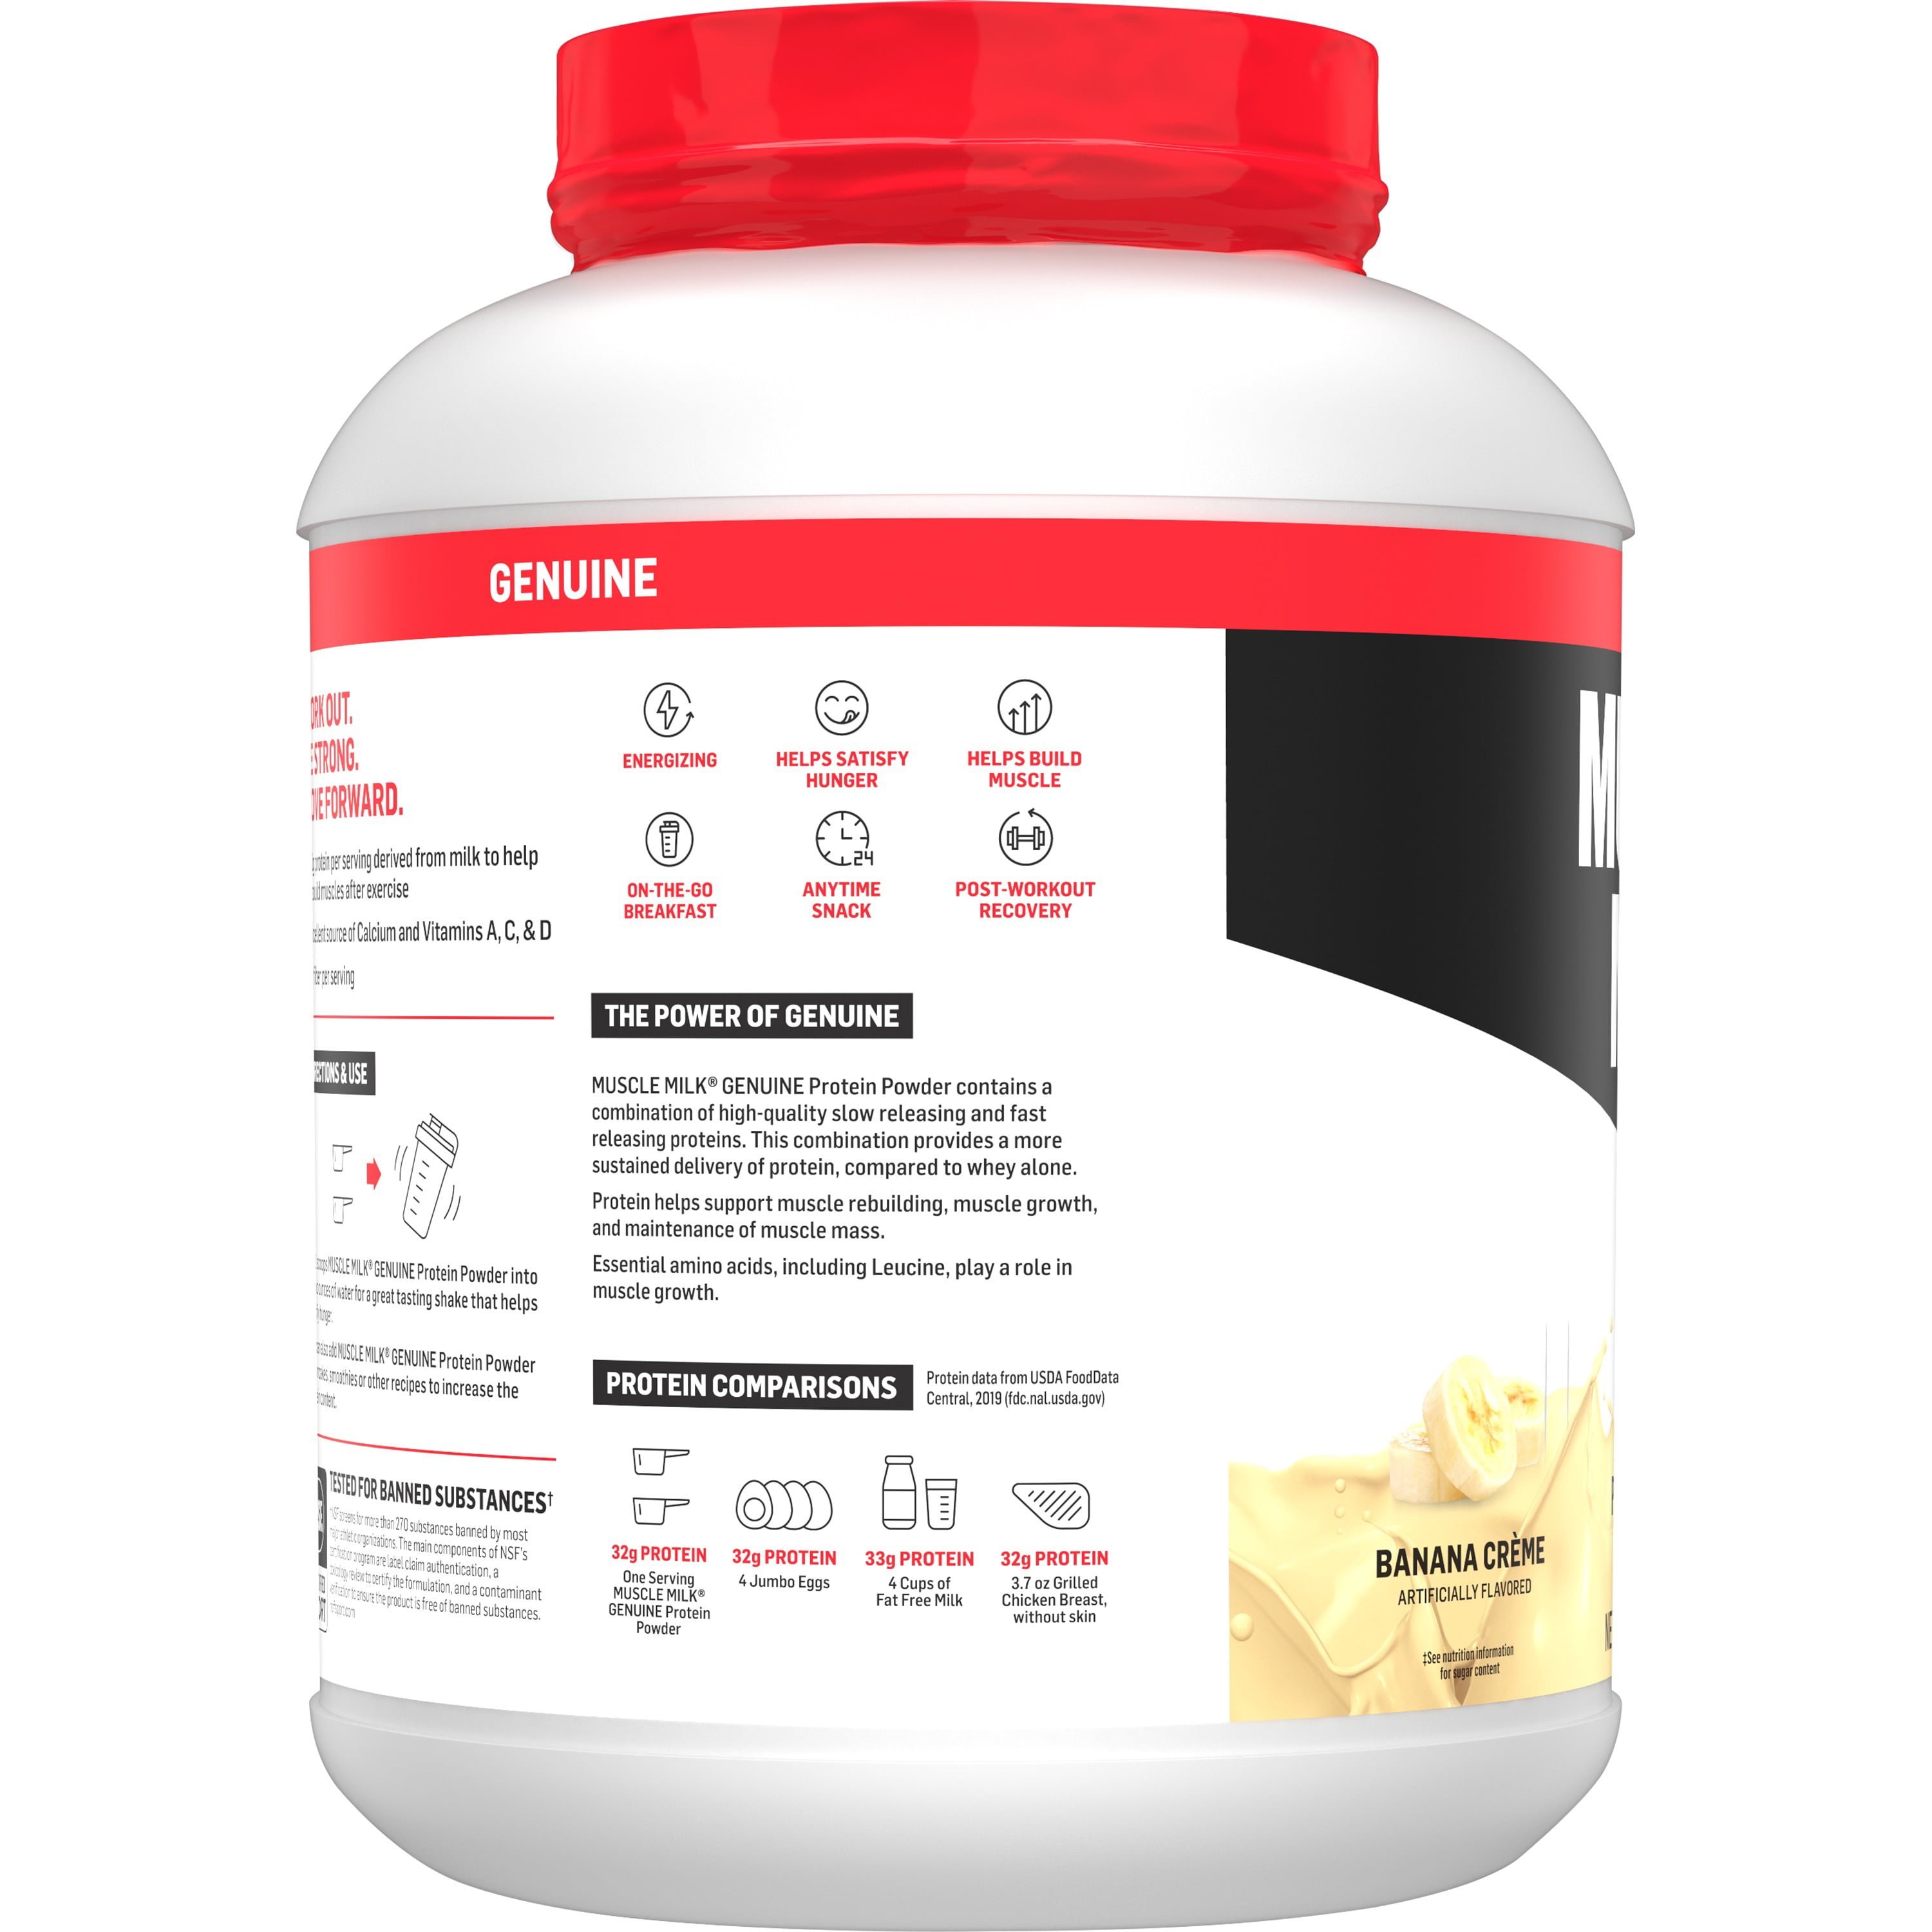 Muscle Milk Genuine Protein Powder, 32g Protein, Banana Creme, 4.94 Pound,  32 Servings